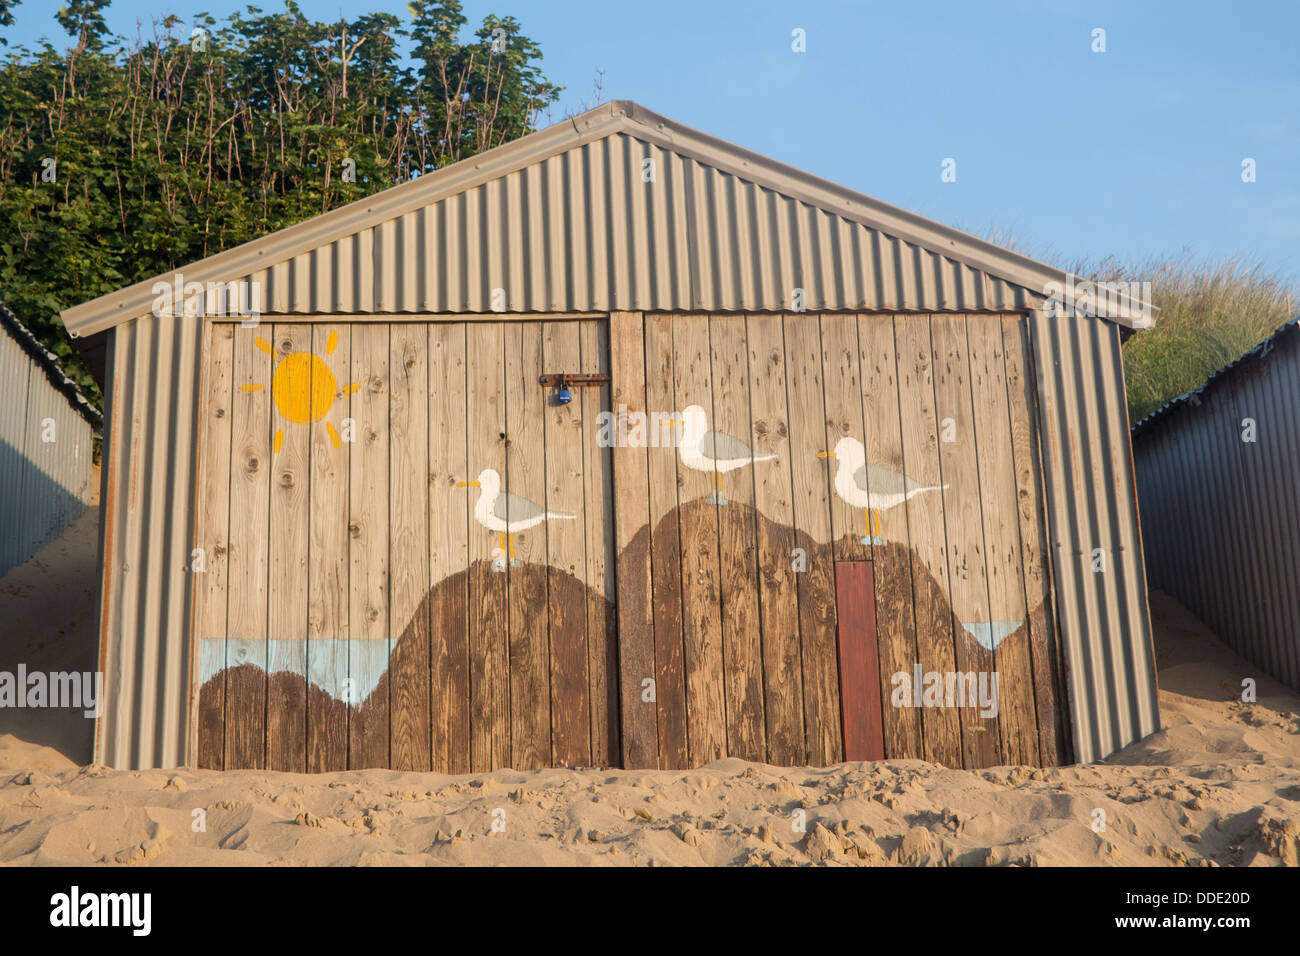 Abersoch beach hut with painting of seagulls perched on rocks on beach on doors Llŷn Peninsula Gwynedd North Wales UK Stock Photo